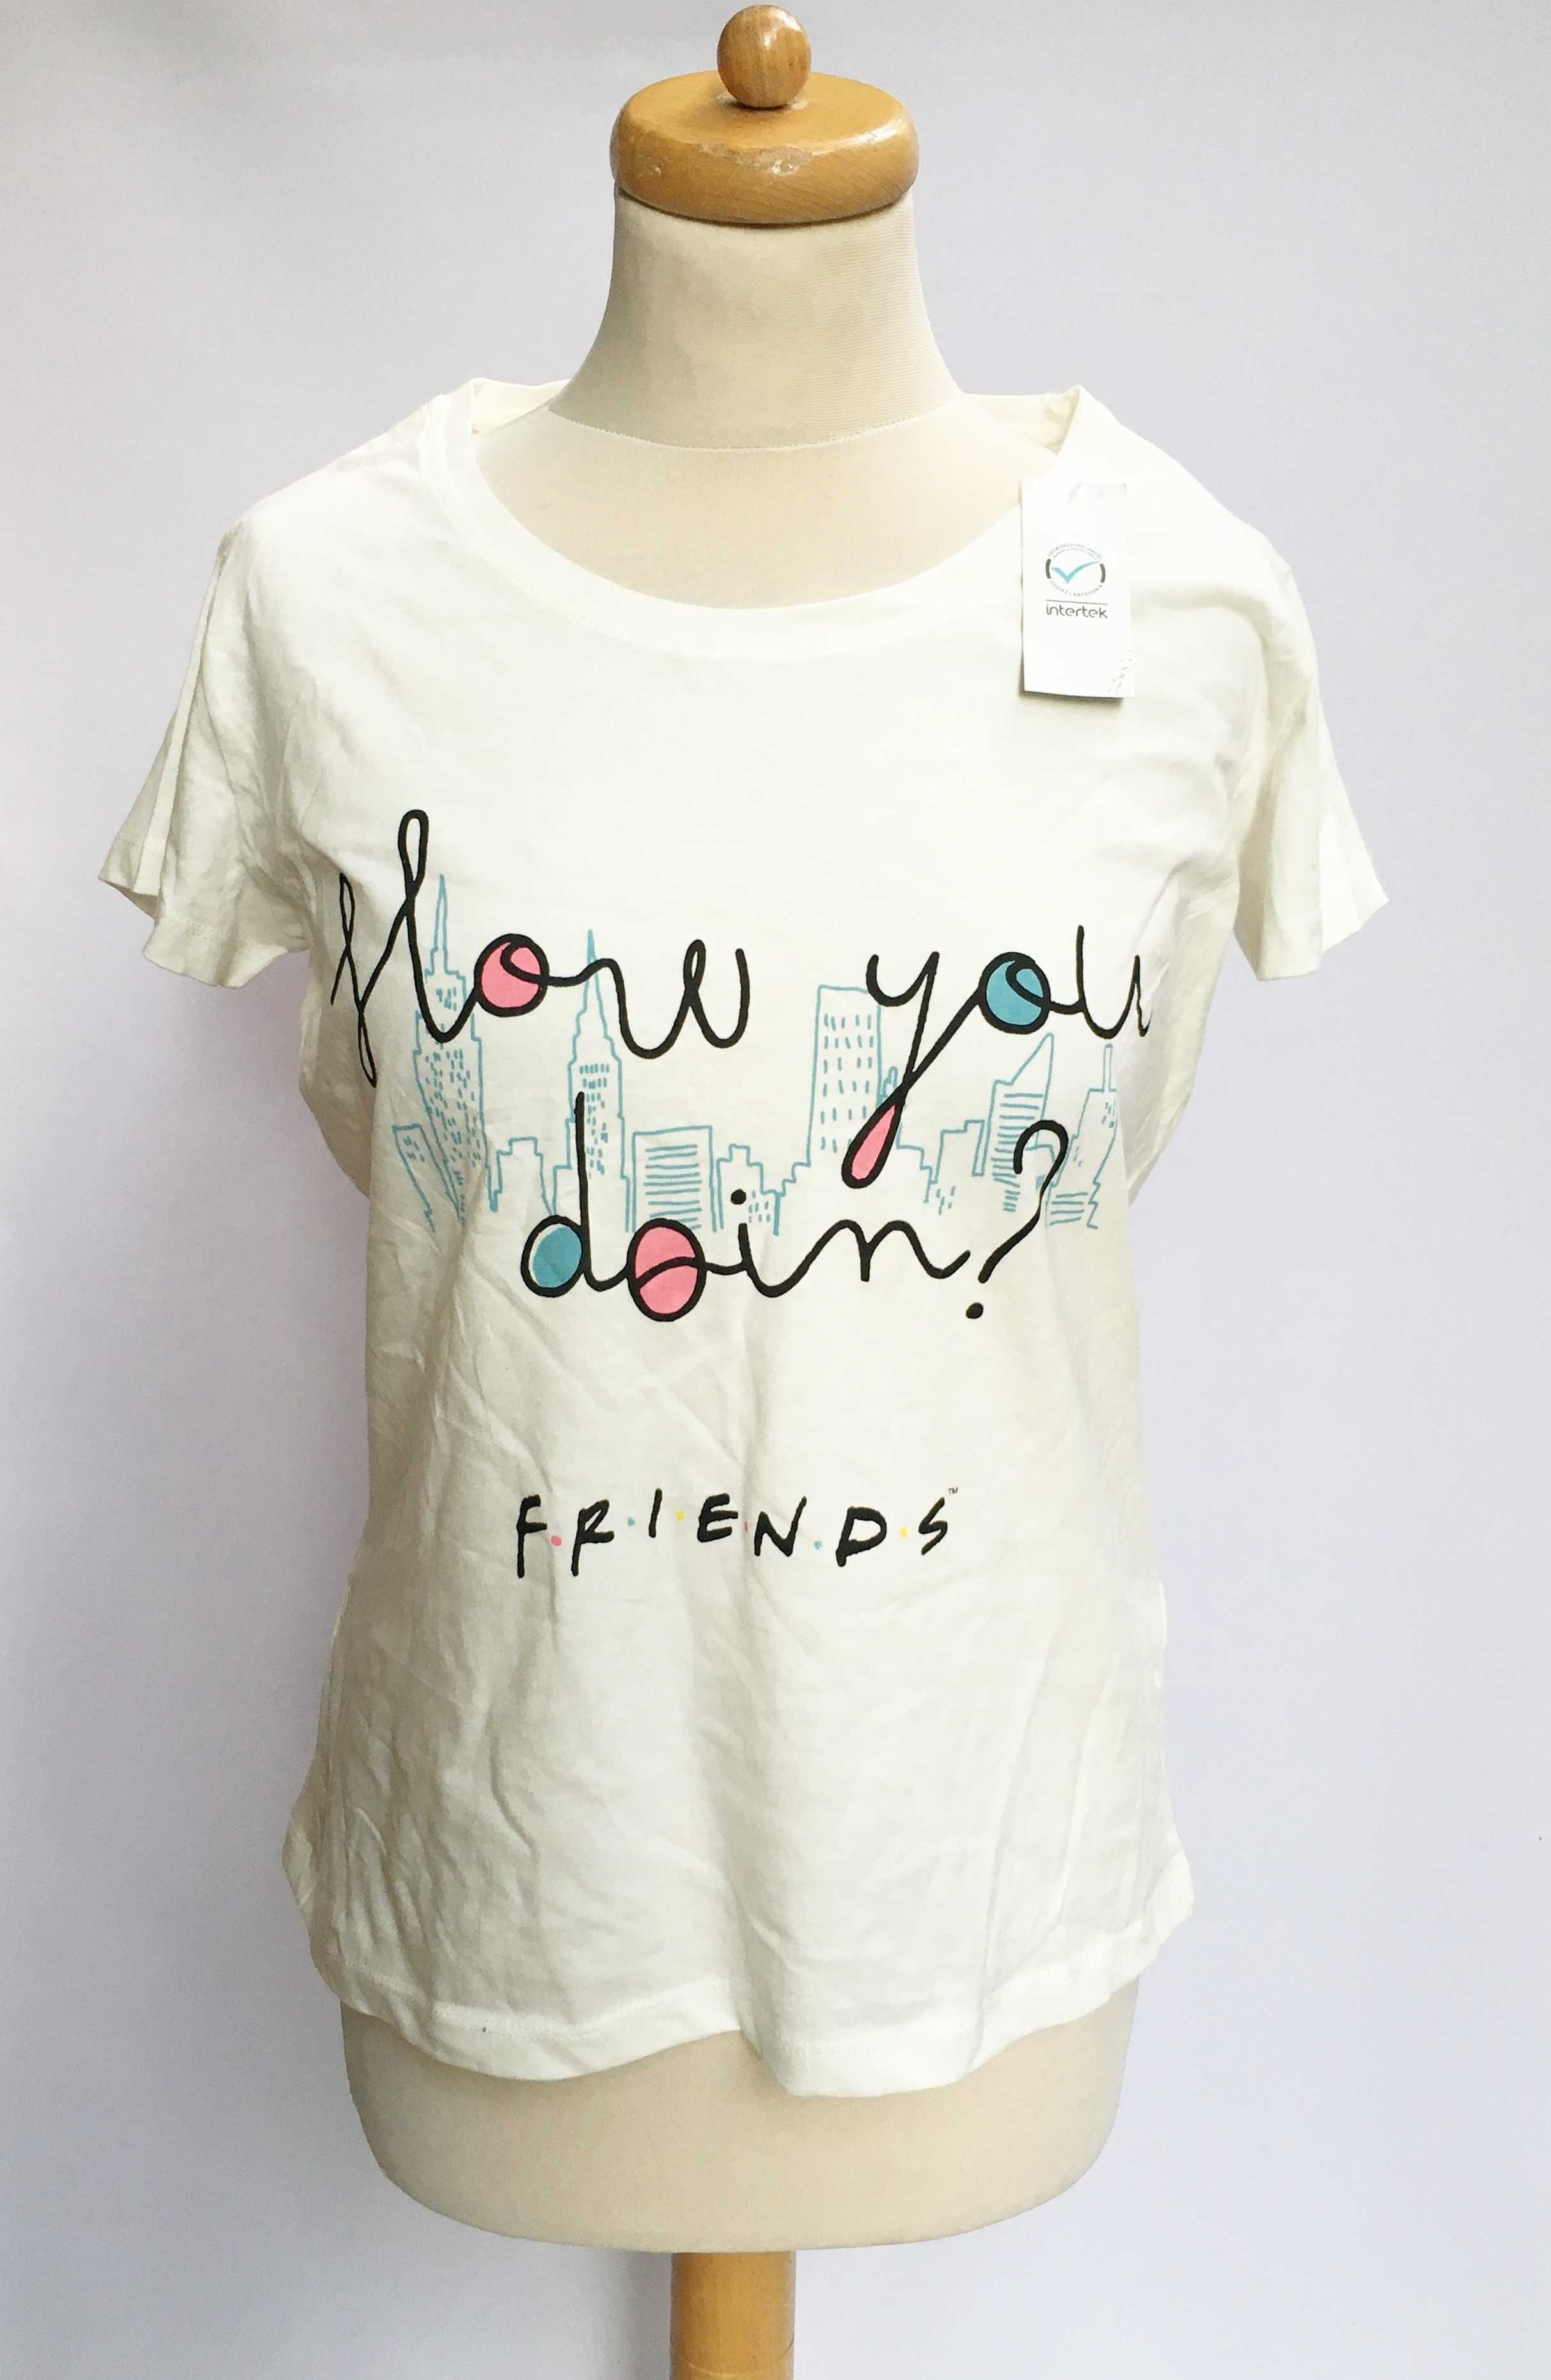 Bluzka NOWA T Shirt Friends S 36 Kremowa Koszulka